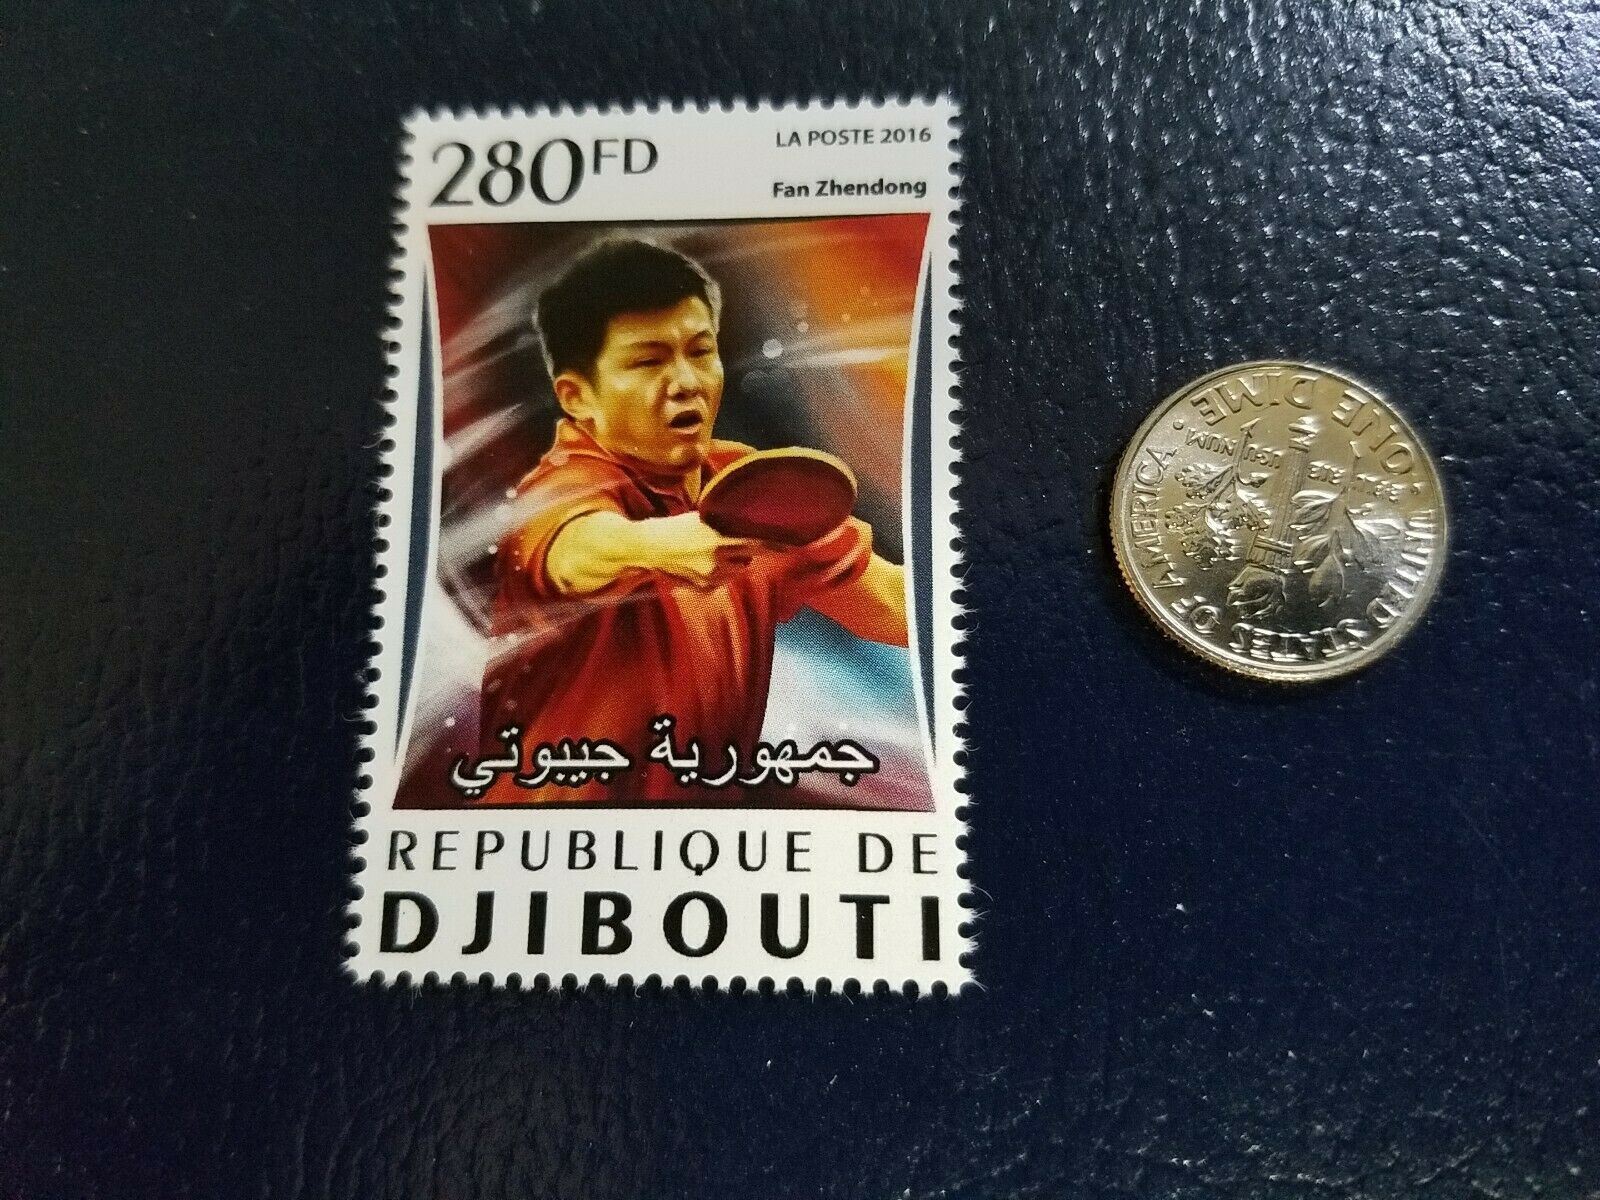 Fan Zhendong Table Tennis 2013 Republique De Djibouti Perforated Stamp